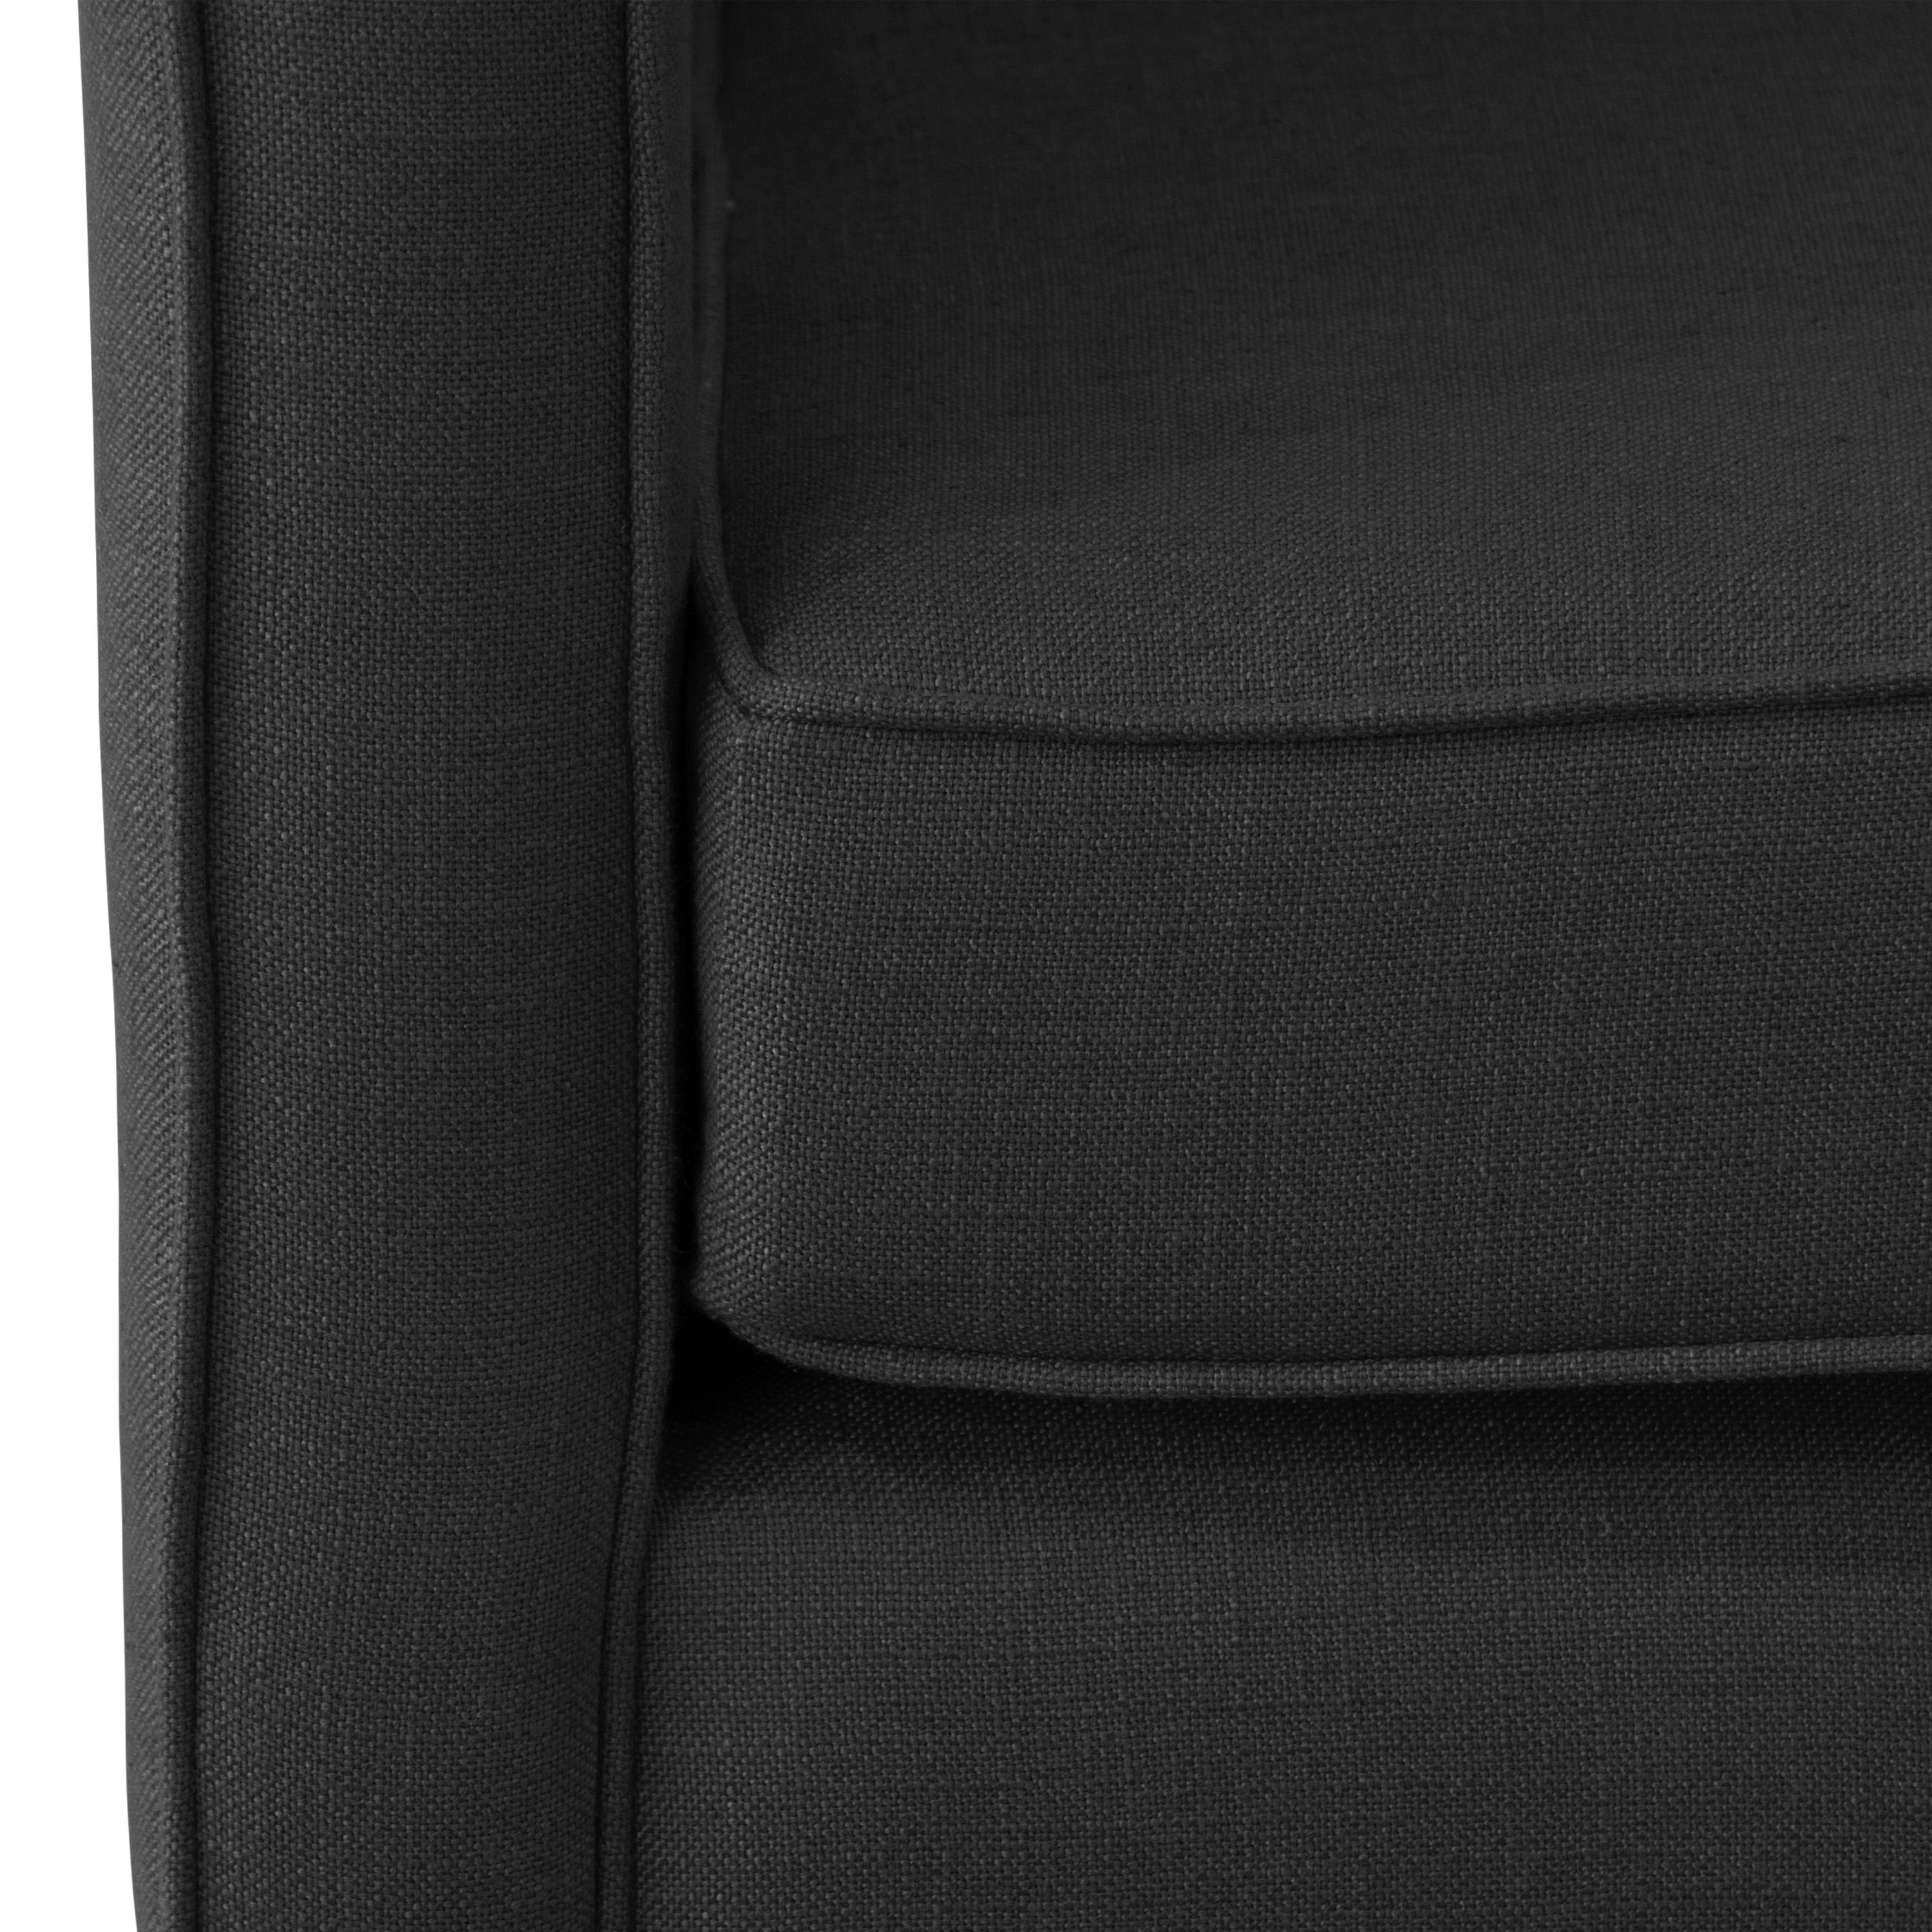 Humboldt Chair, Caviar - Image 4